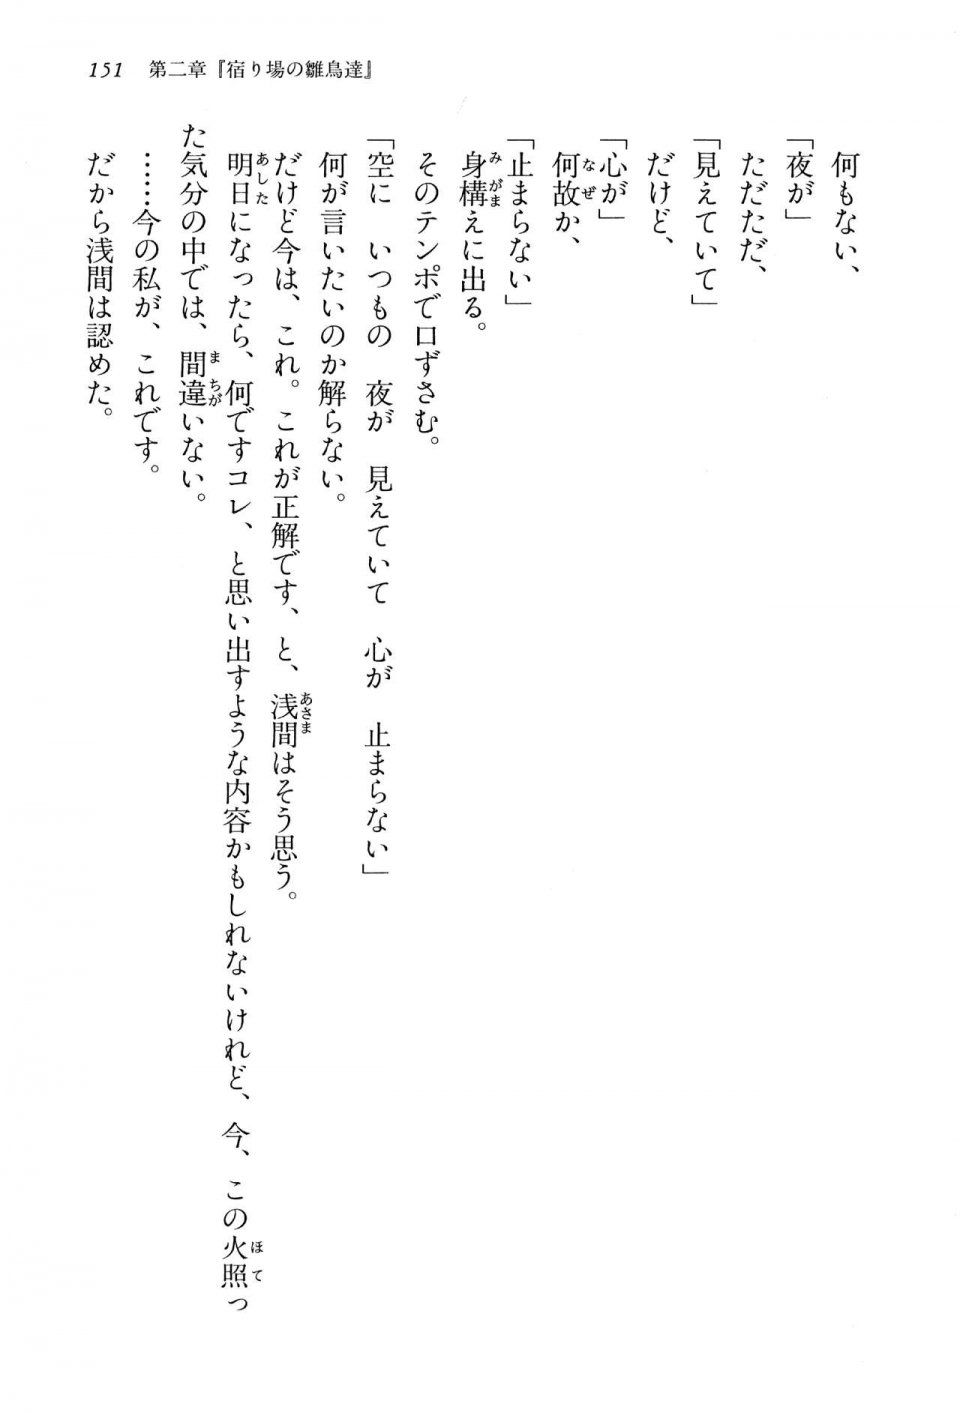 Kyoukai Senjou no Horizon BD Special Mininovel Vol 1(1A) - Photo #155